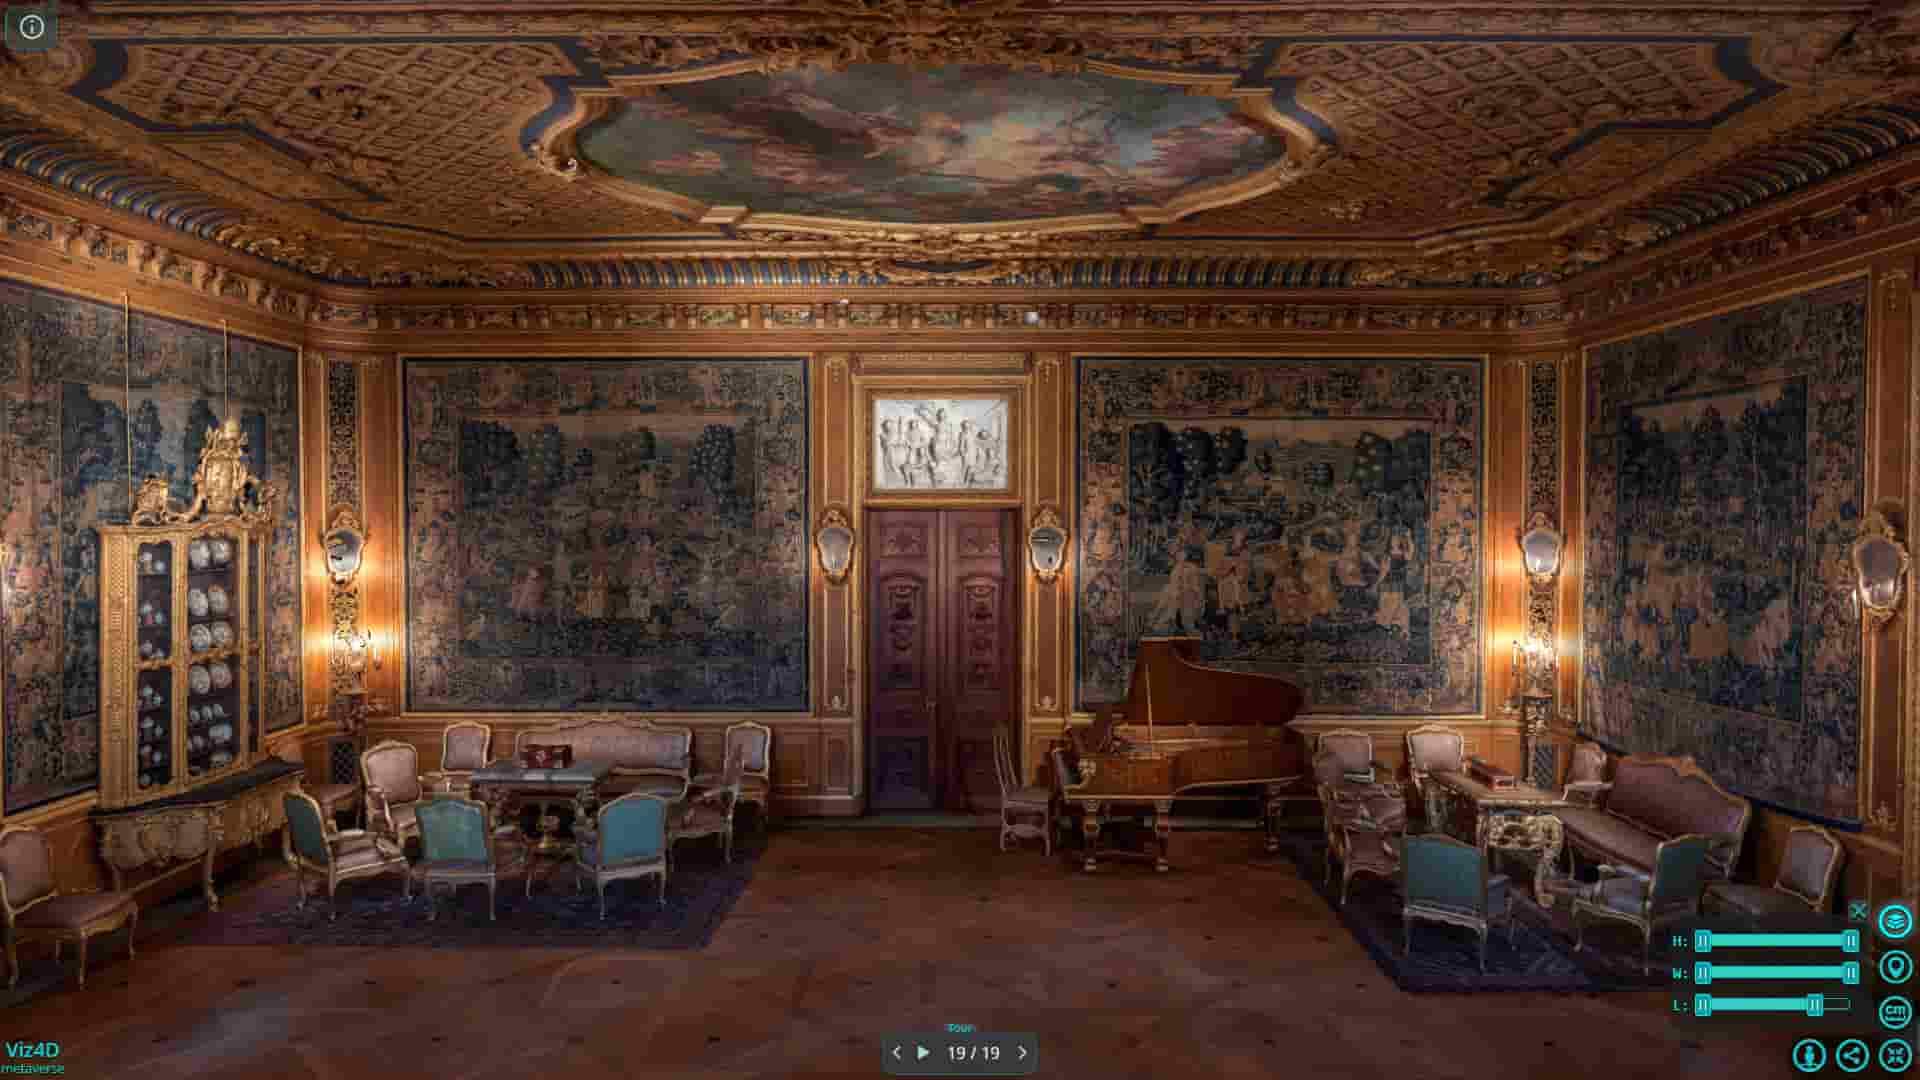 17th century Swedish Baroque interior decoration.